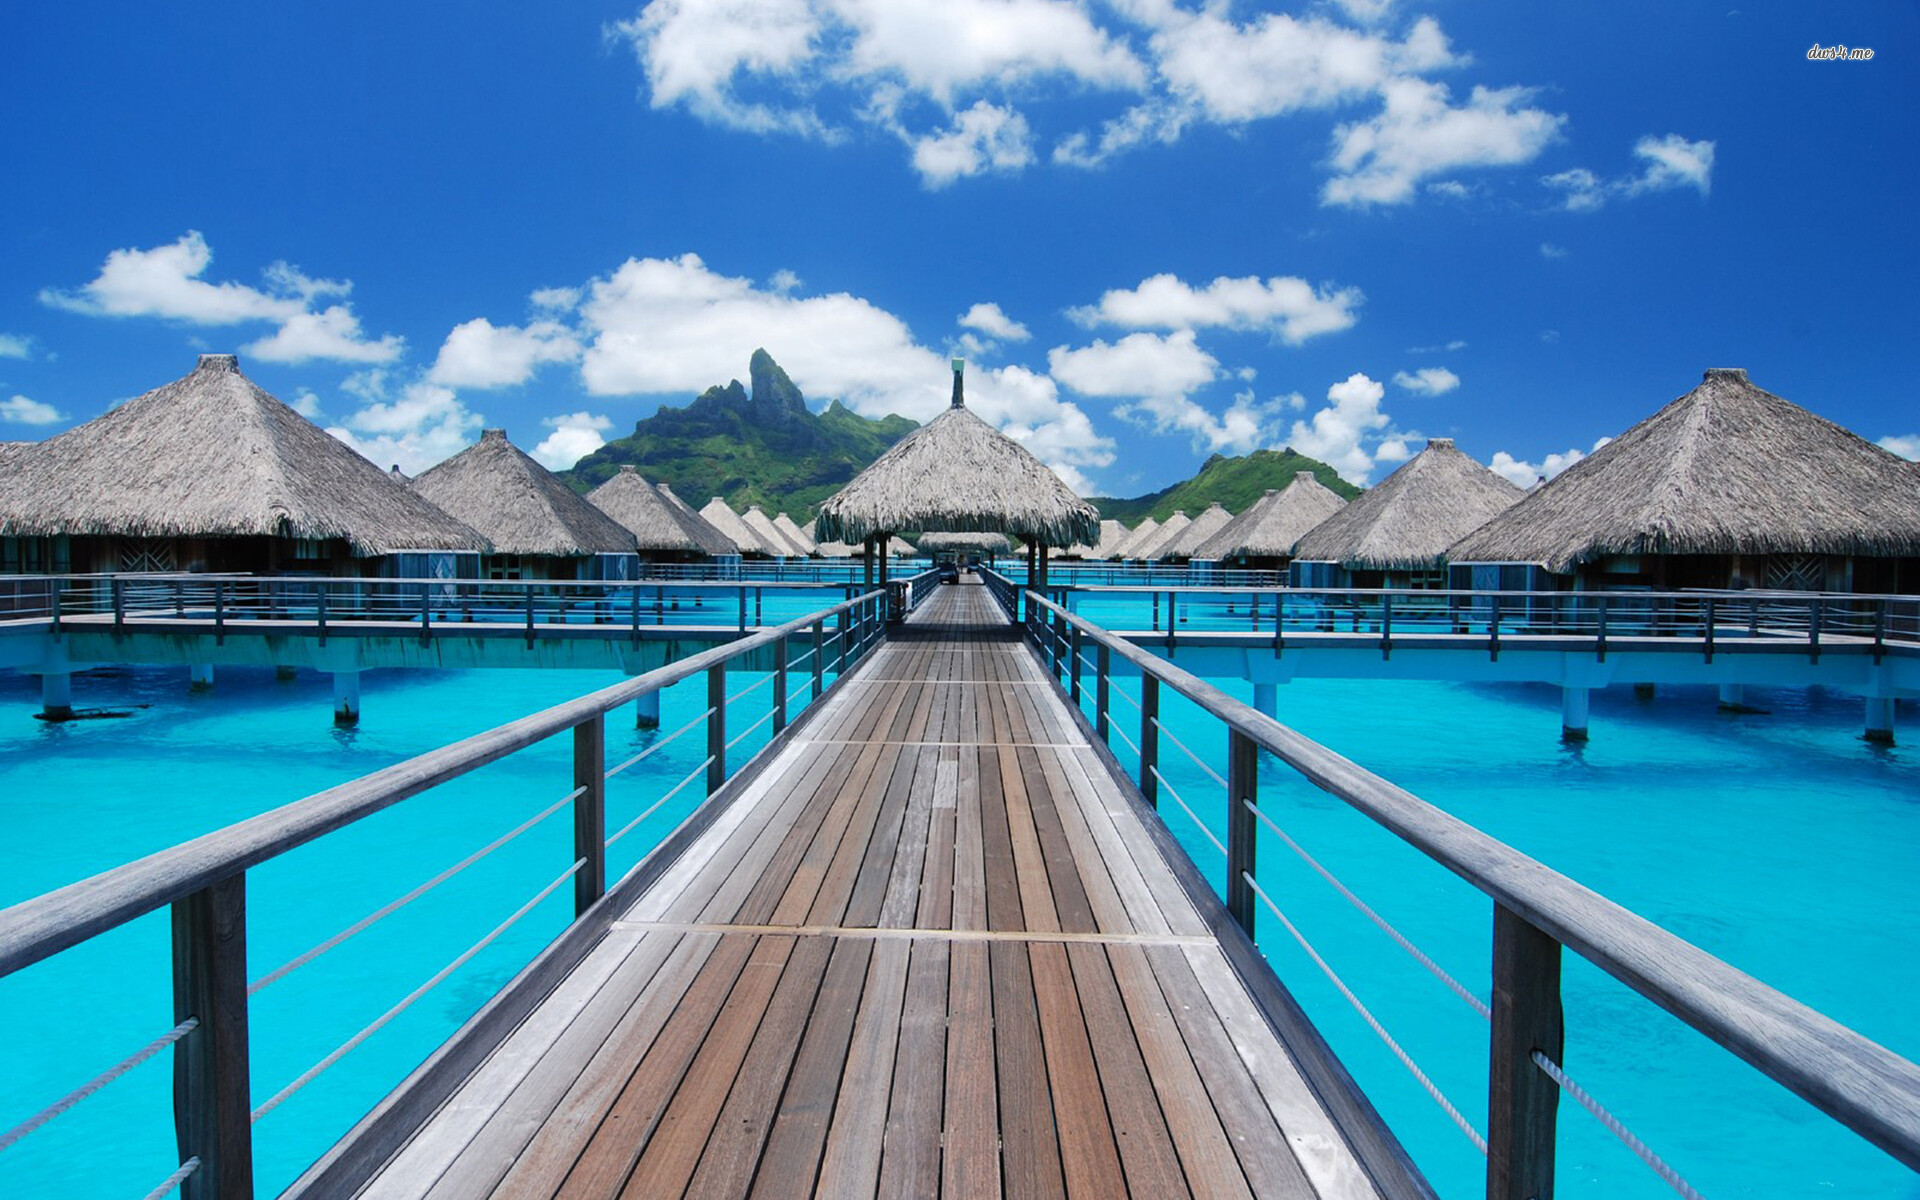 Tahiti: The St. Regis Bora Bora Resort, A luxury resort on French Polynesia's iconic island. 1920x1200 HD Wallpaper.